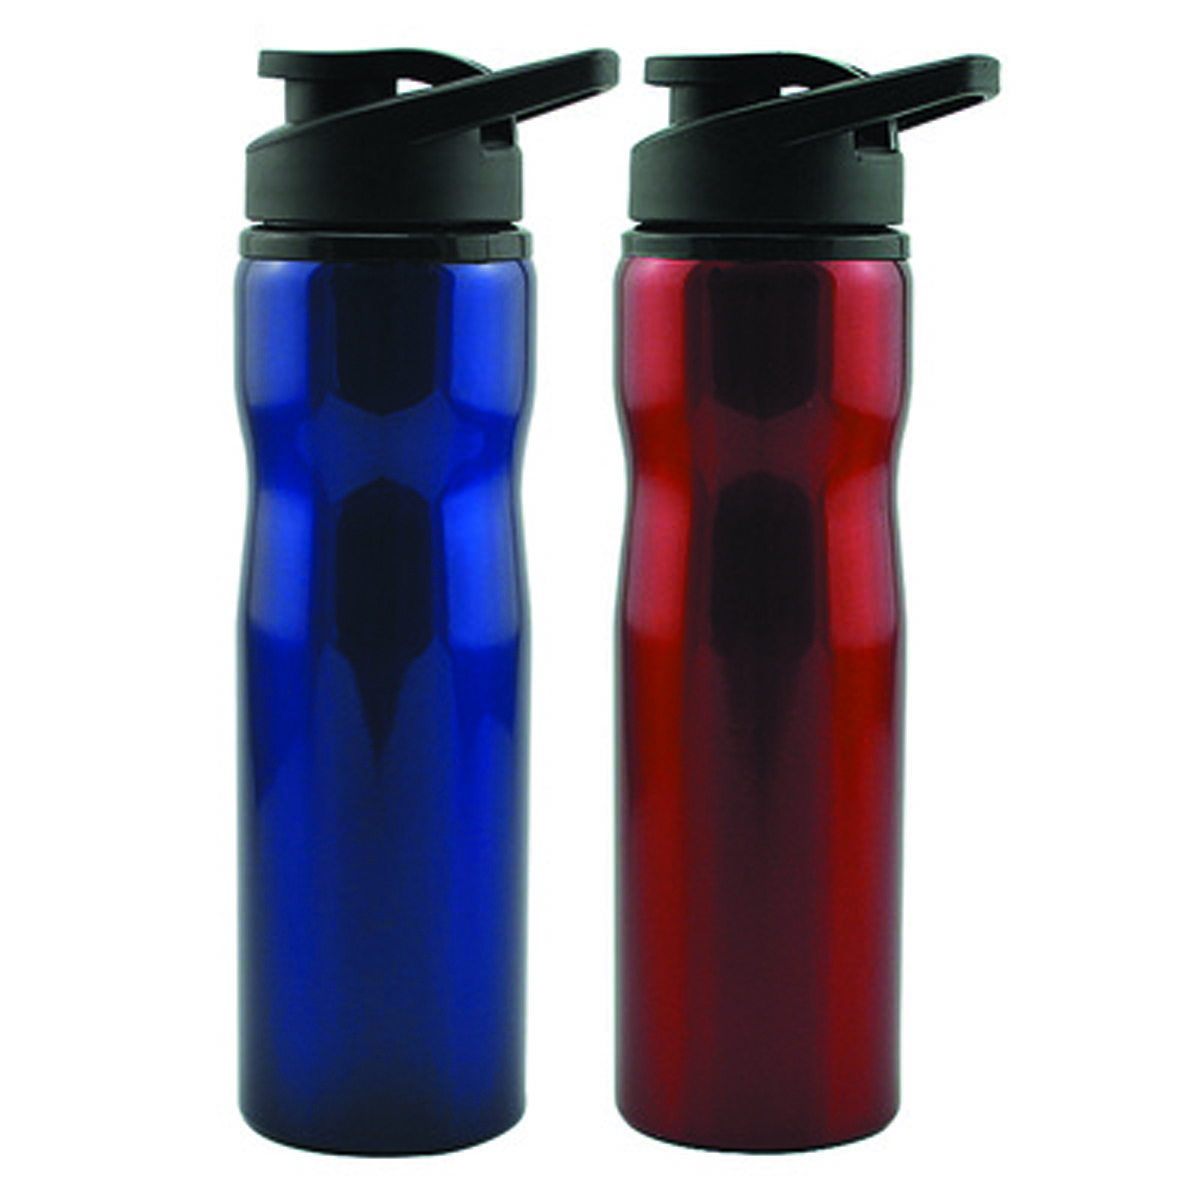 GL-AKL0043 23 oz Sports Water Bottle with Carabiner Hanger